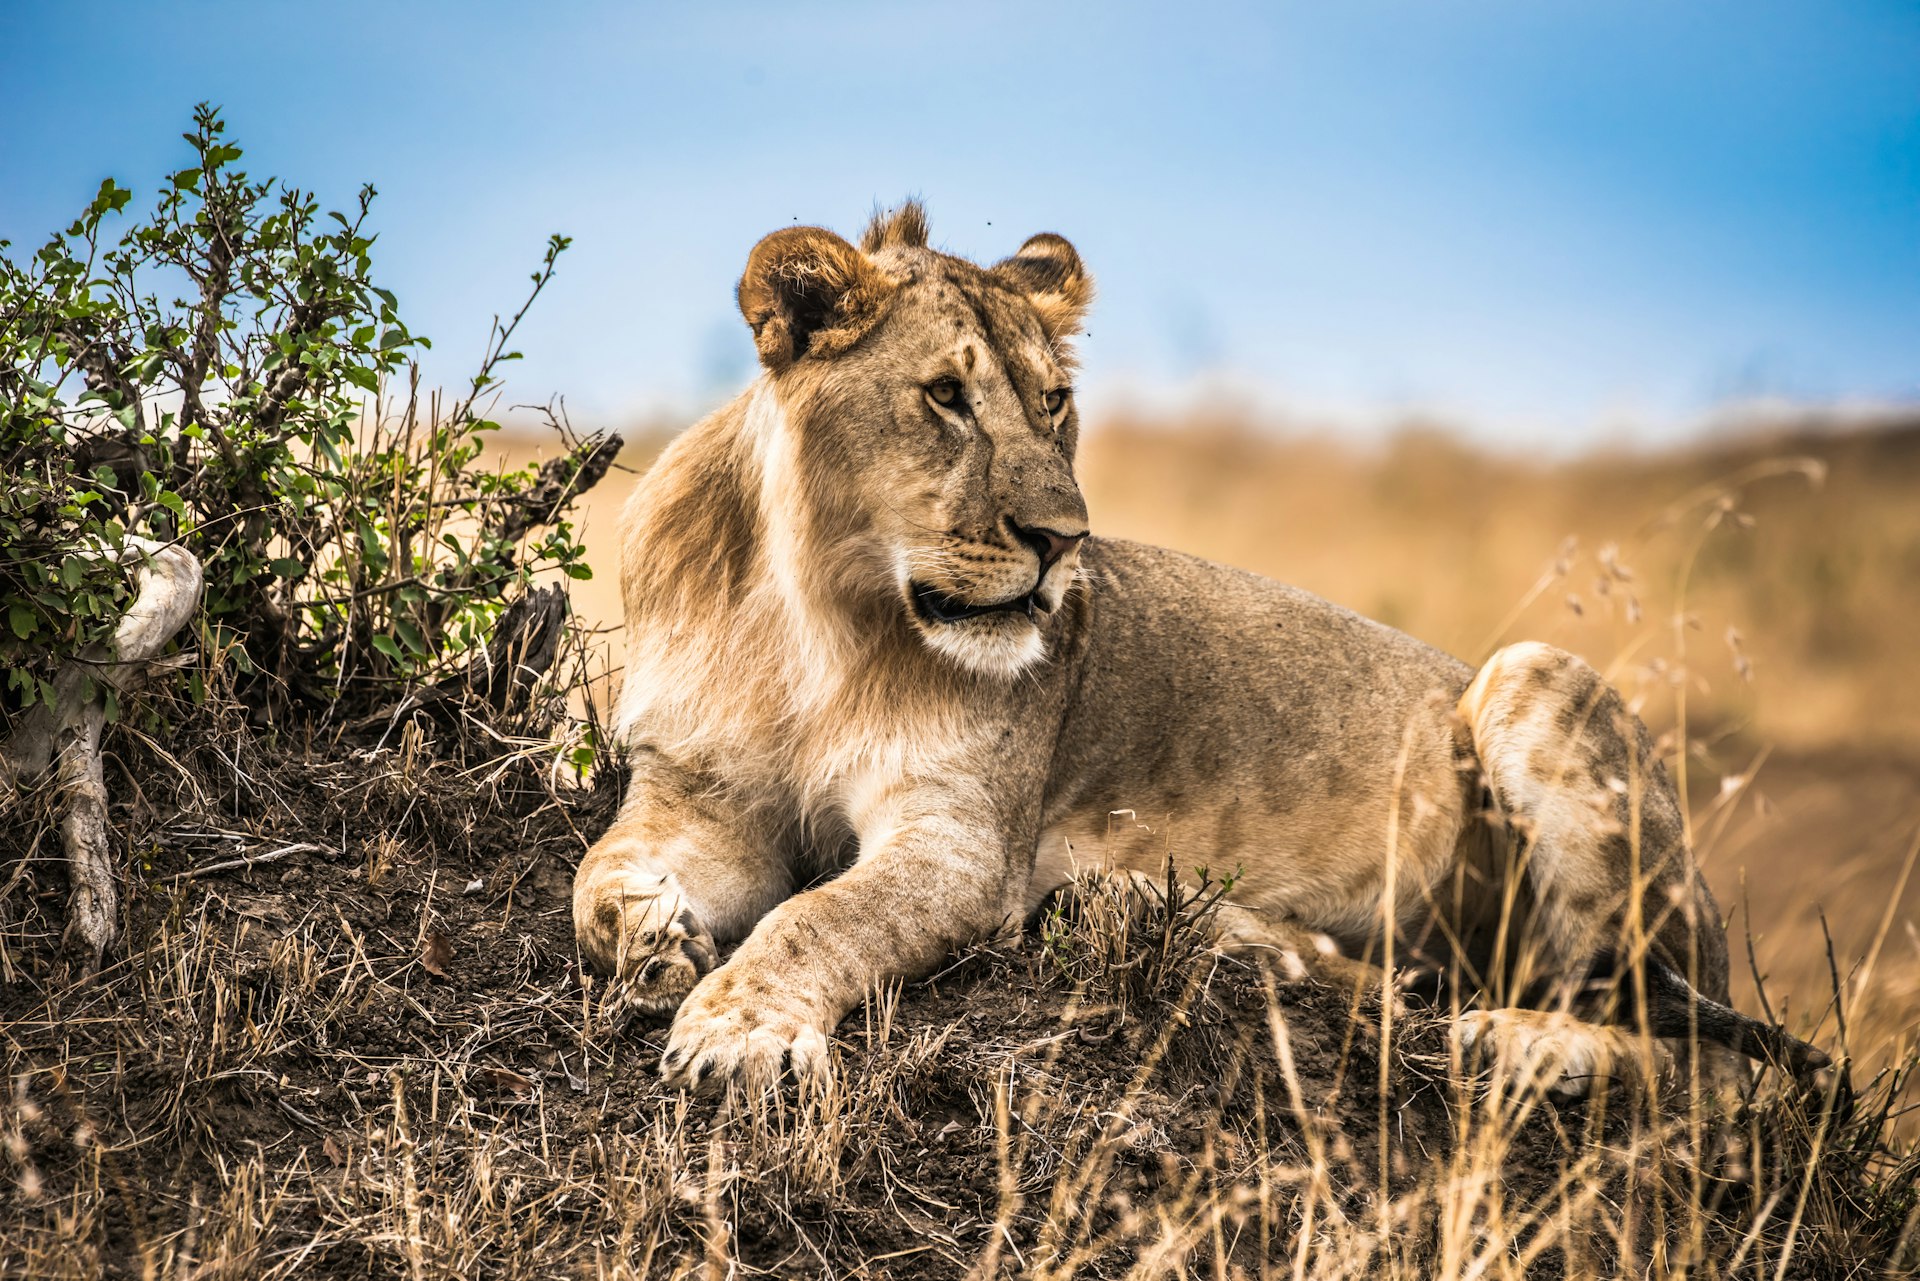 A lion in the Masai Mara National Reserve in Kenya